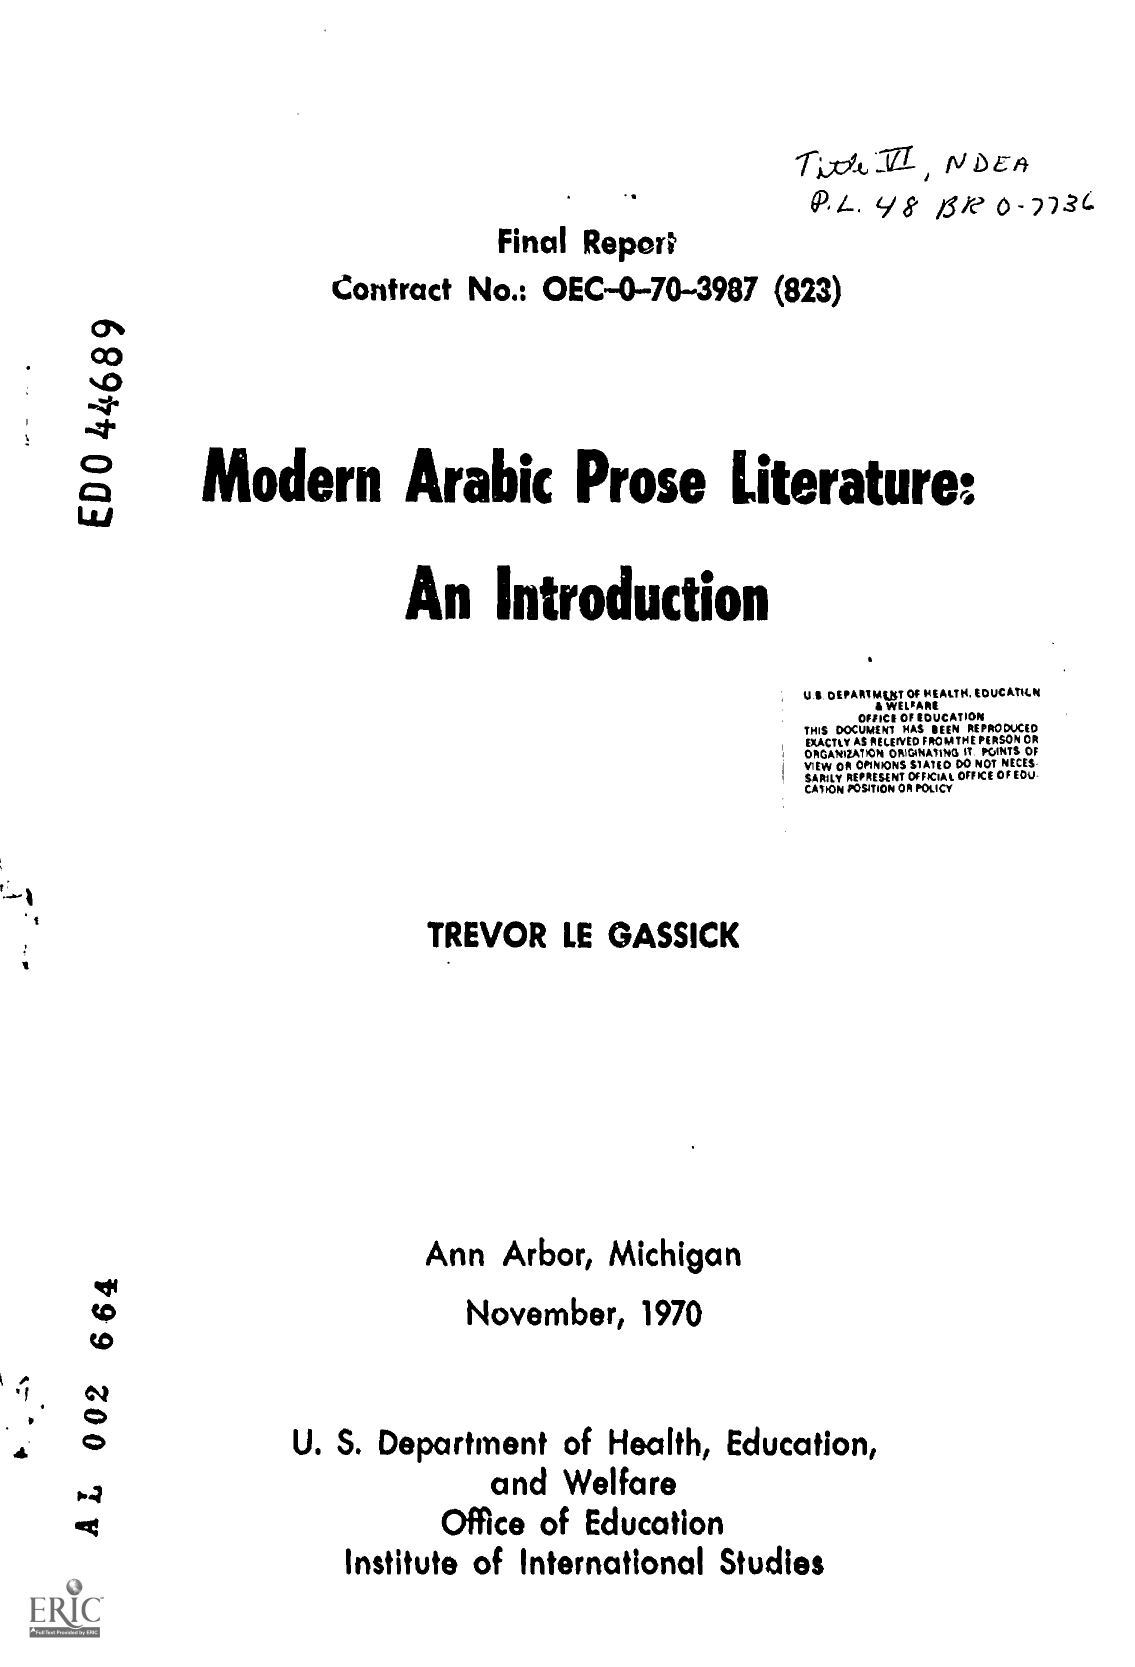 Trevor Le Gassick, "Modern Arabic Prose Literature: An Introduction", Michigan University, Ann Arbor., Institute of International Studie, Washington, D.C., 1970.